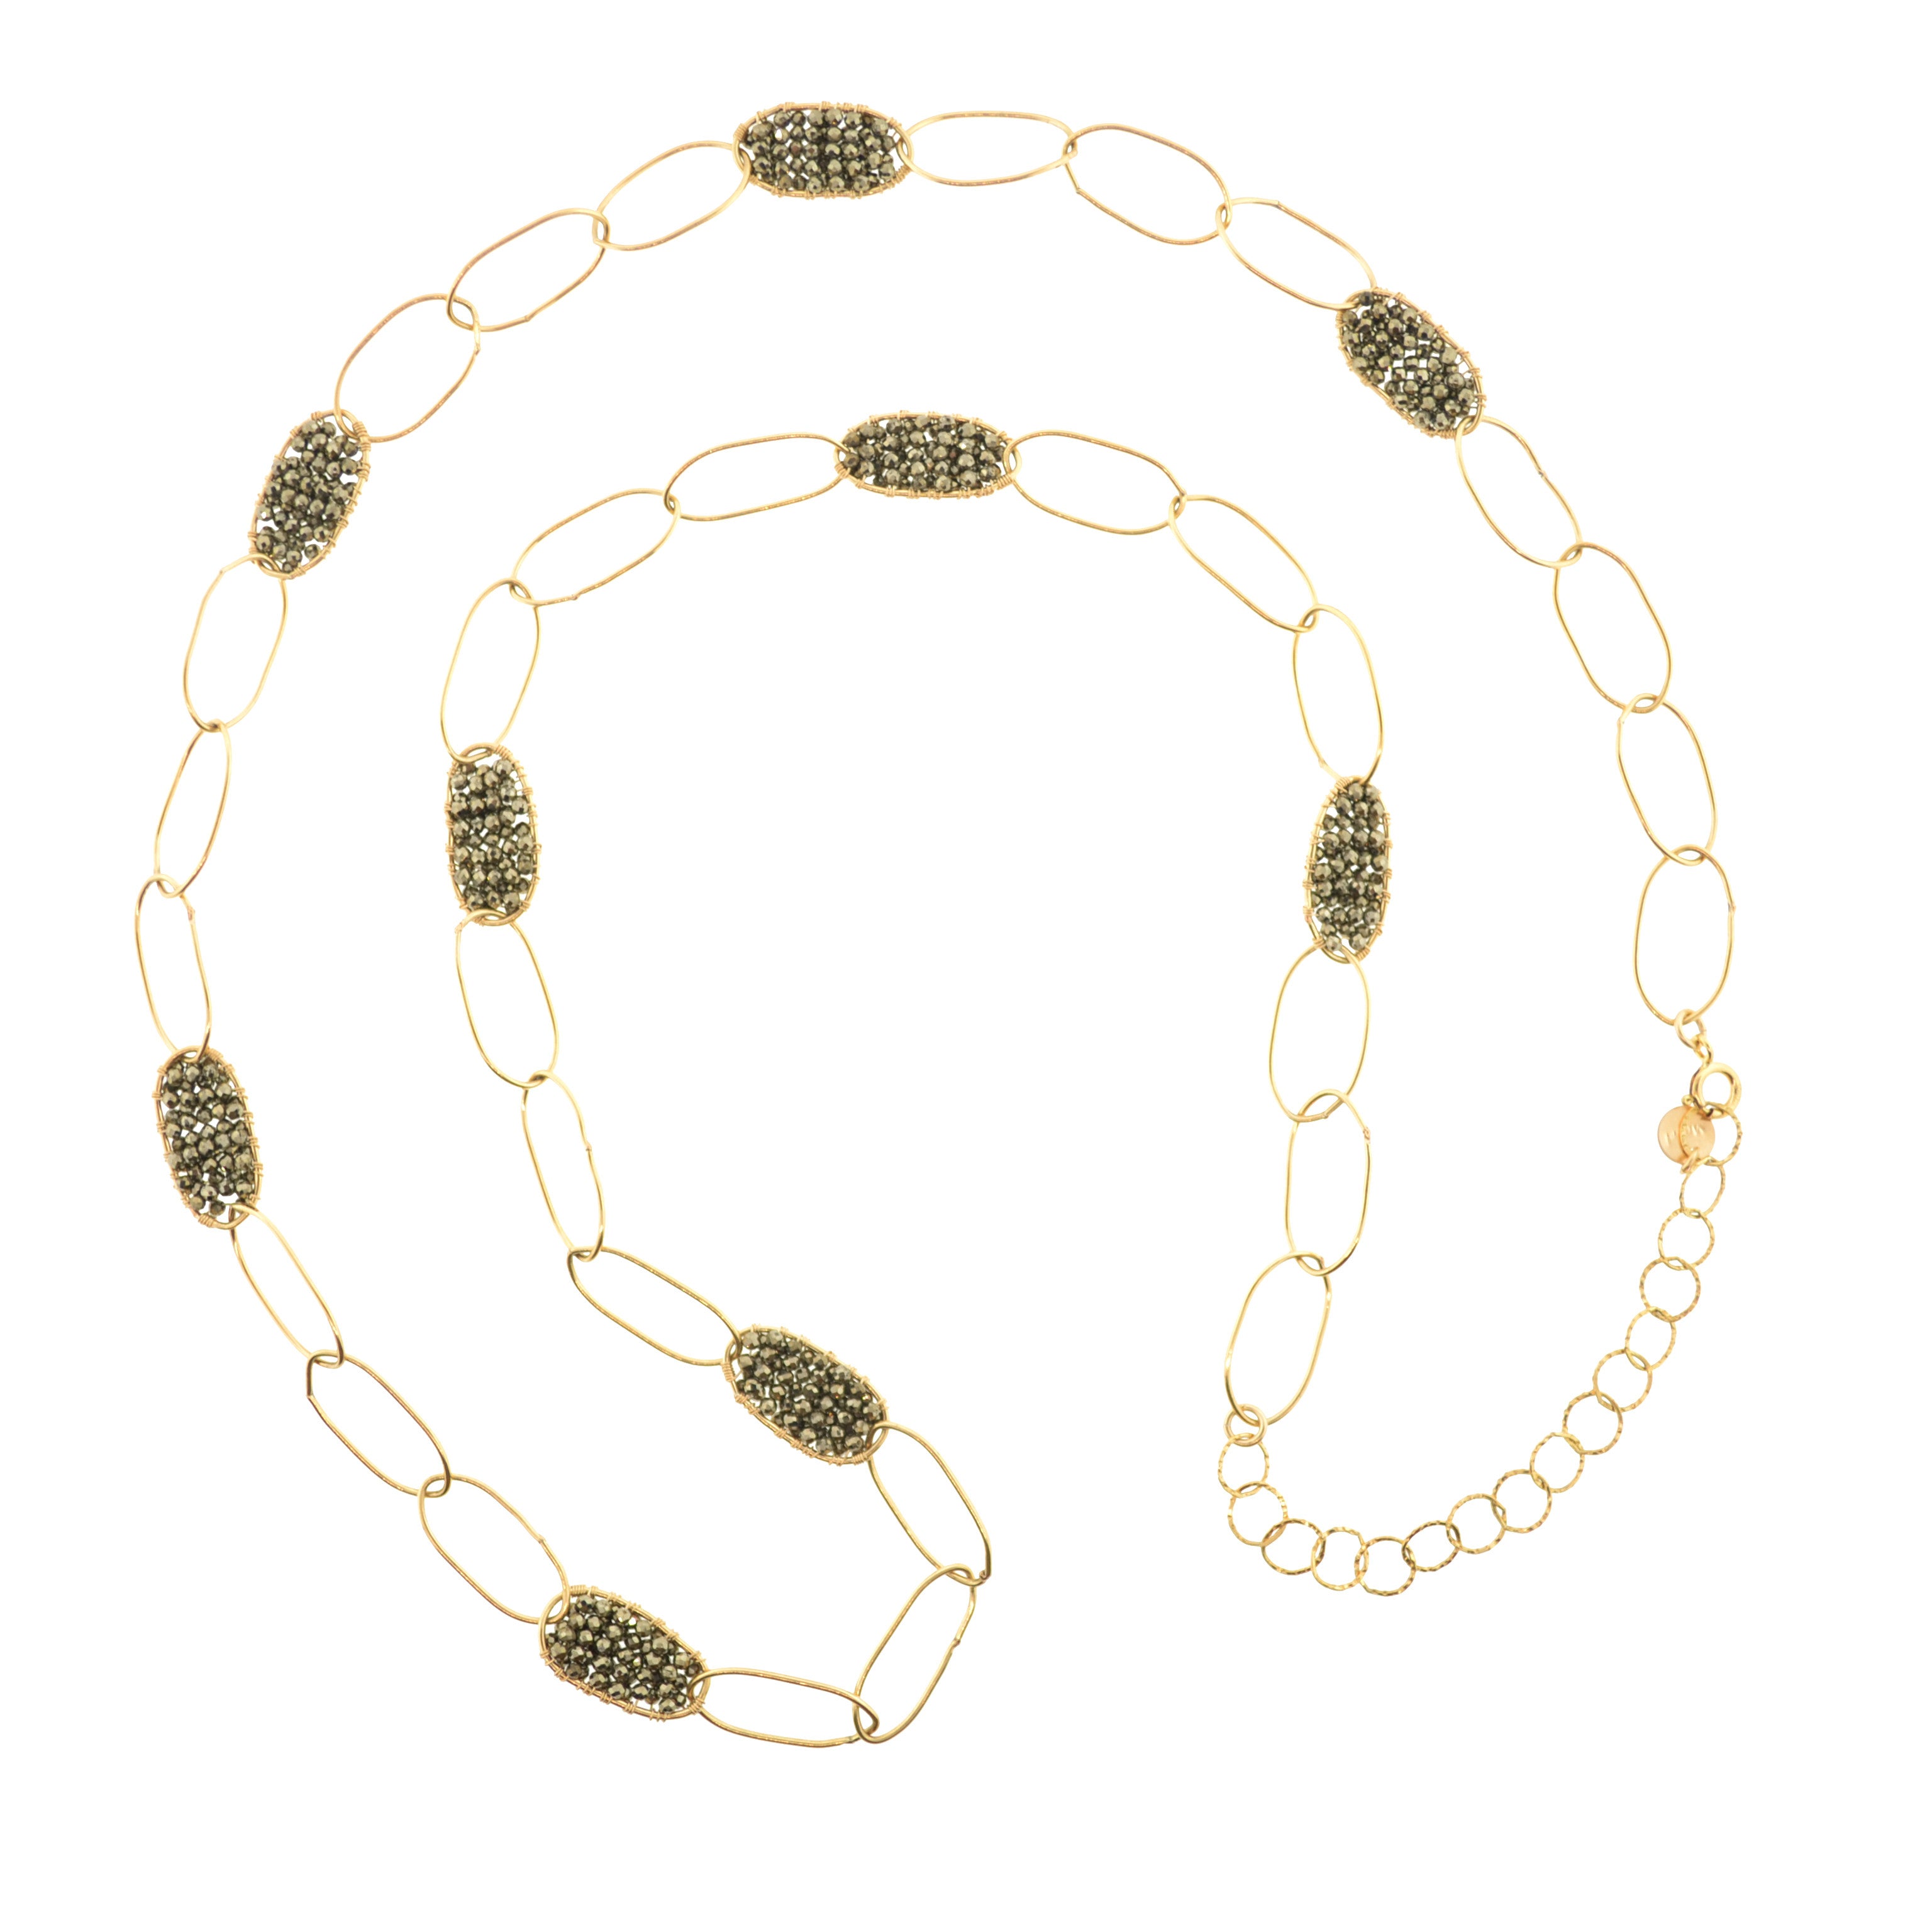 Woven Pyrite Necklace - Long